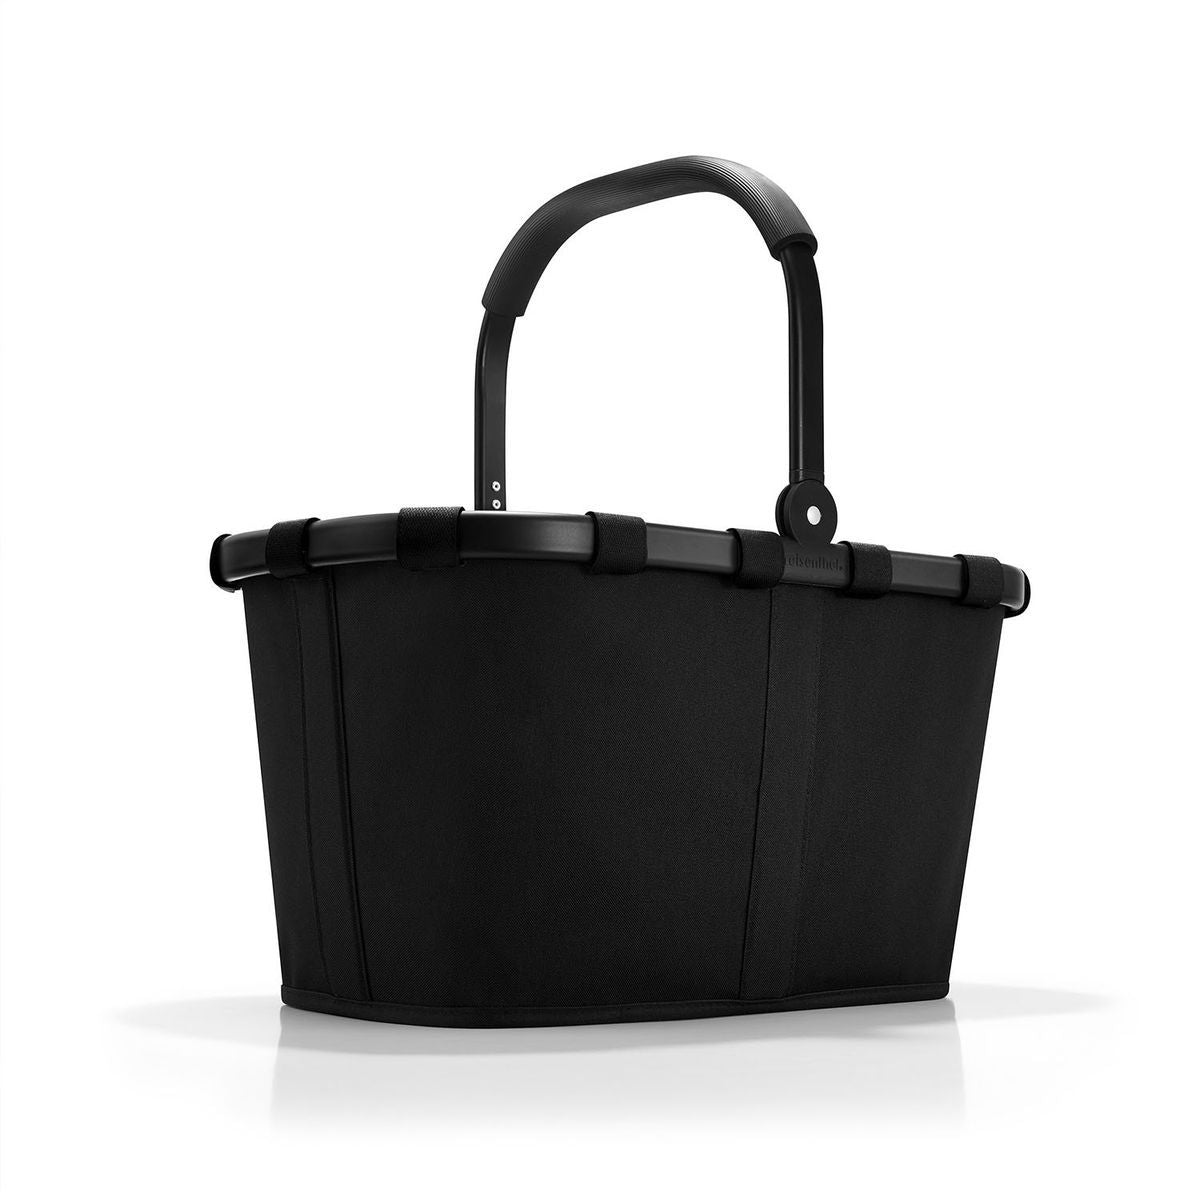 Reisenthel Carrybag Frame Black Black Einkaufskorb